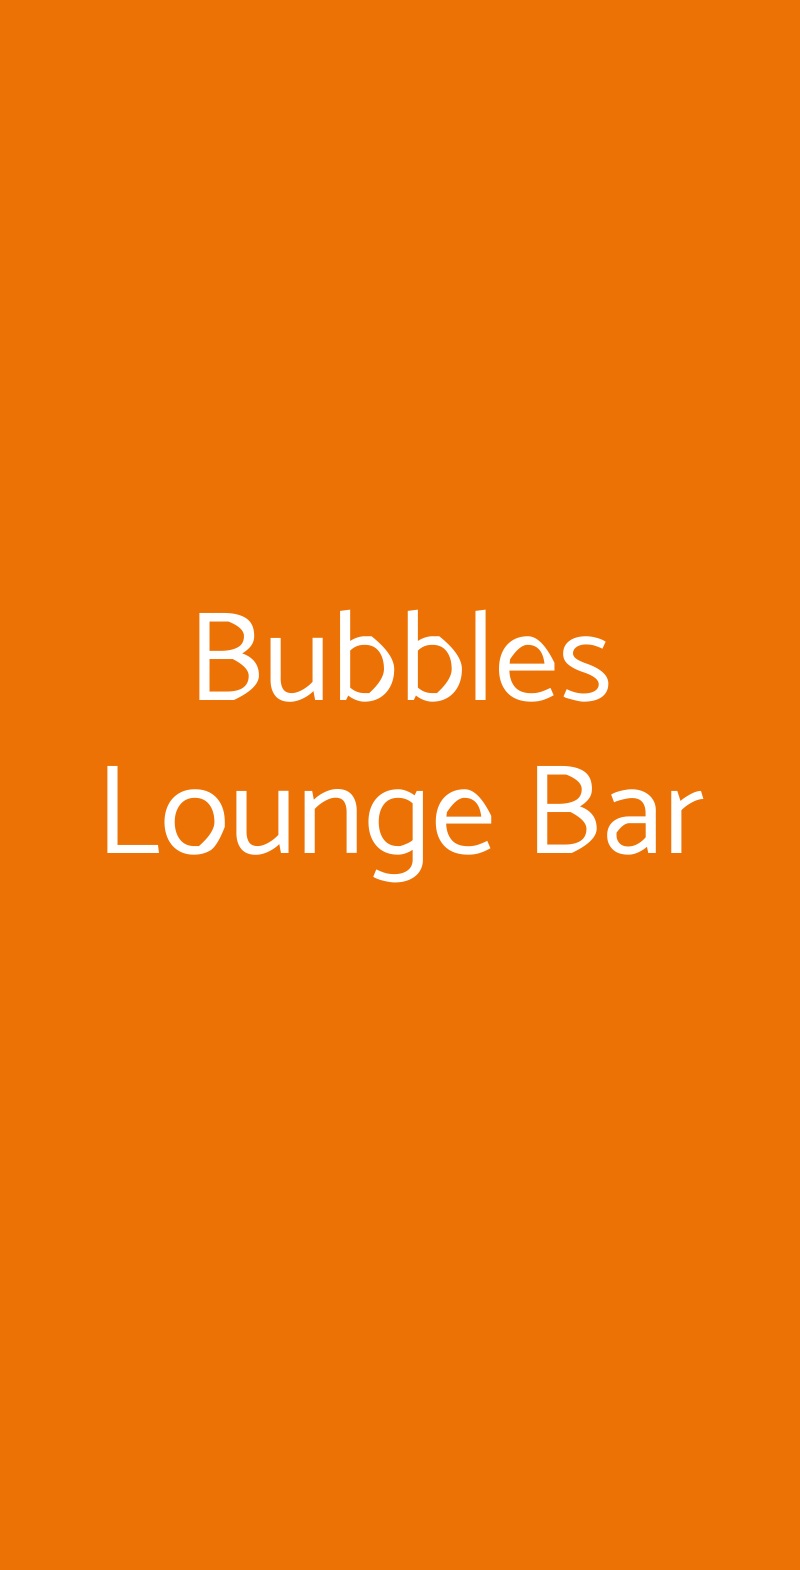 Bubbles Lounge Bar Milano menù 1 pagina